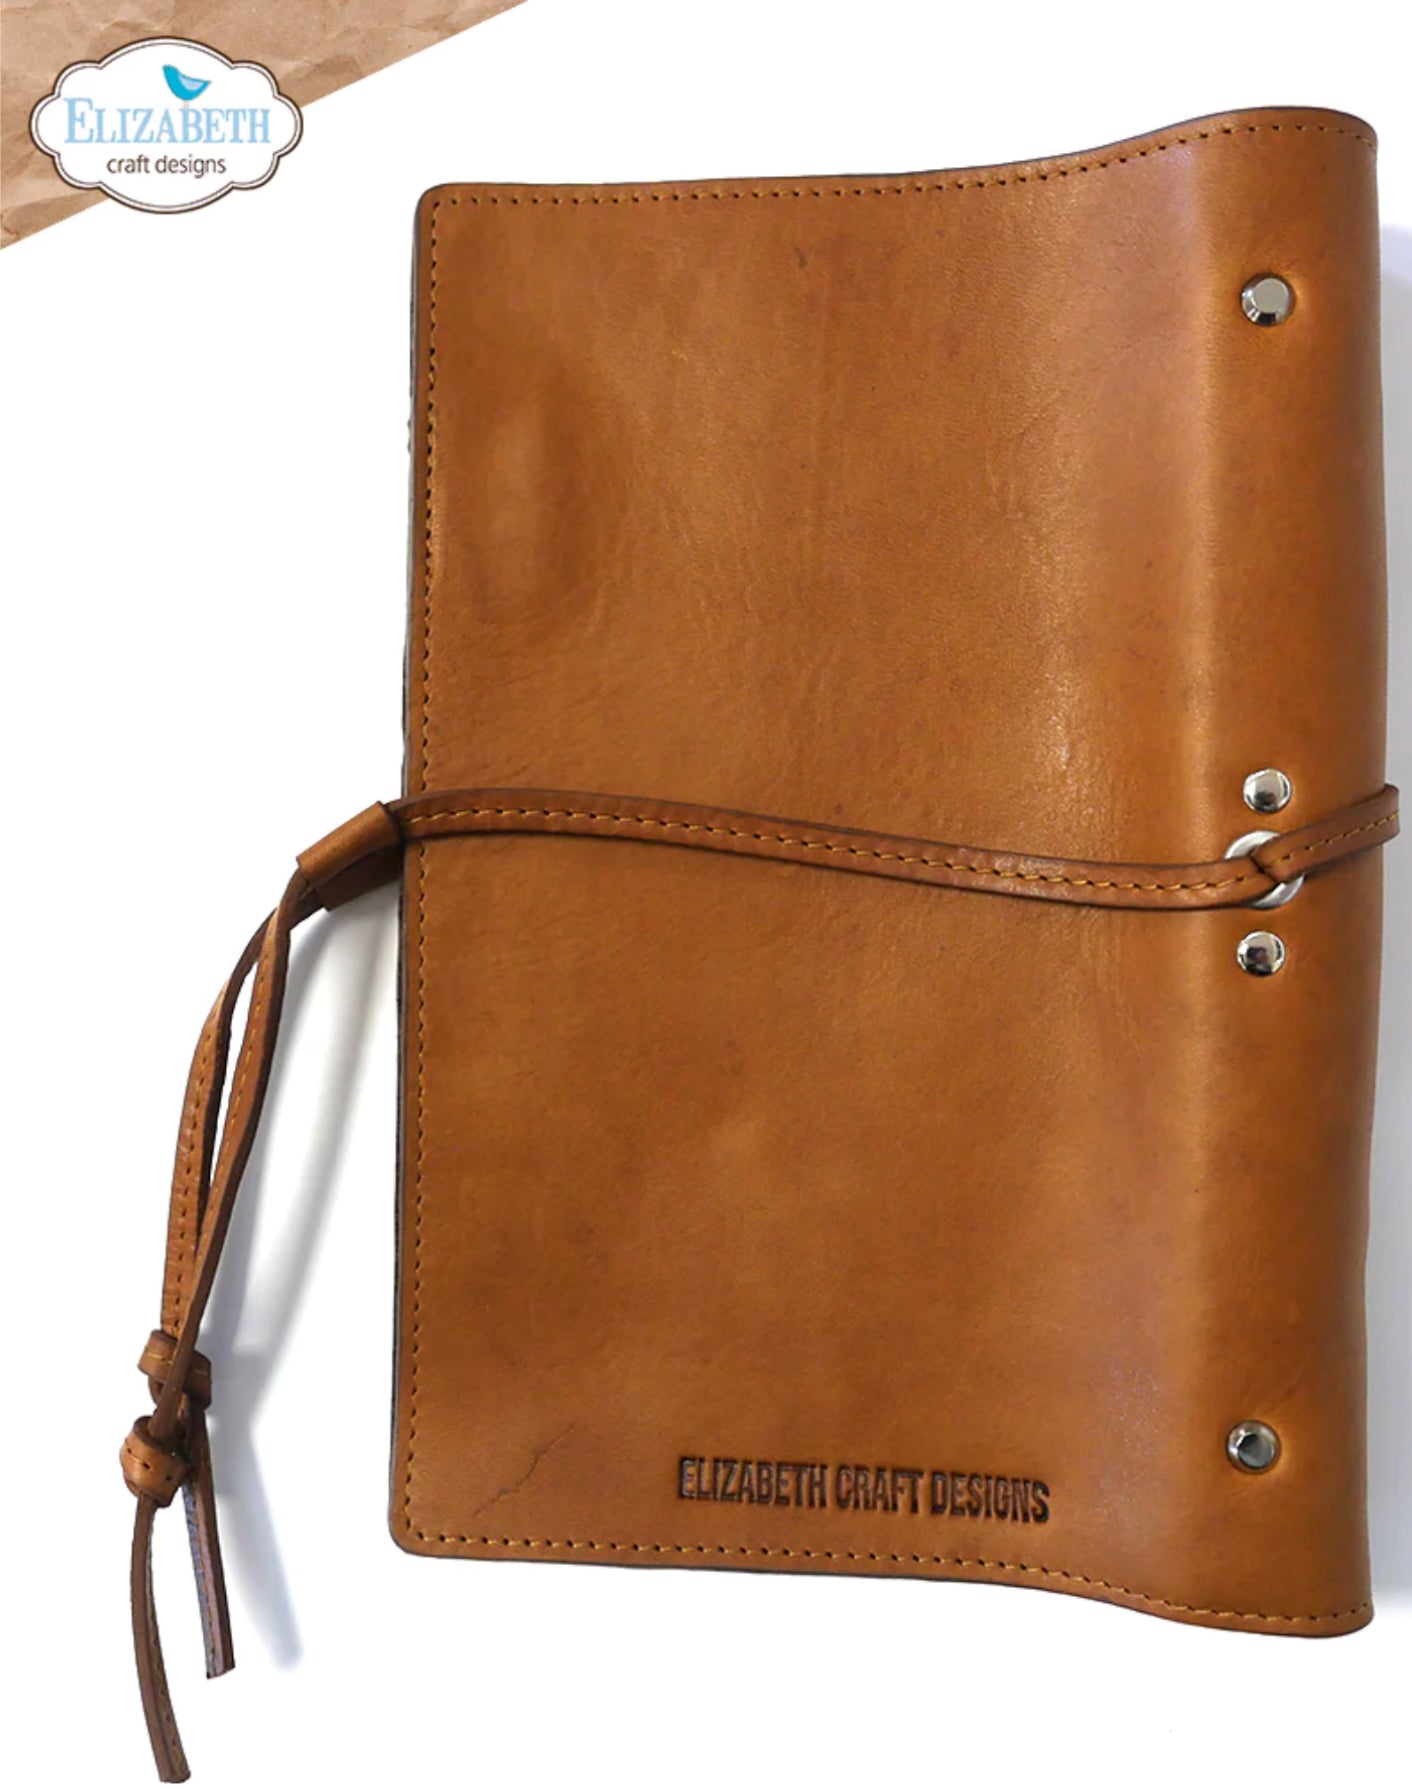 Elizabeth Craft Designs A5 Planner - Handmade Italian Leather Tan